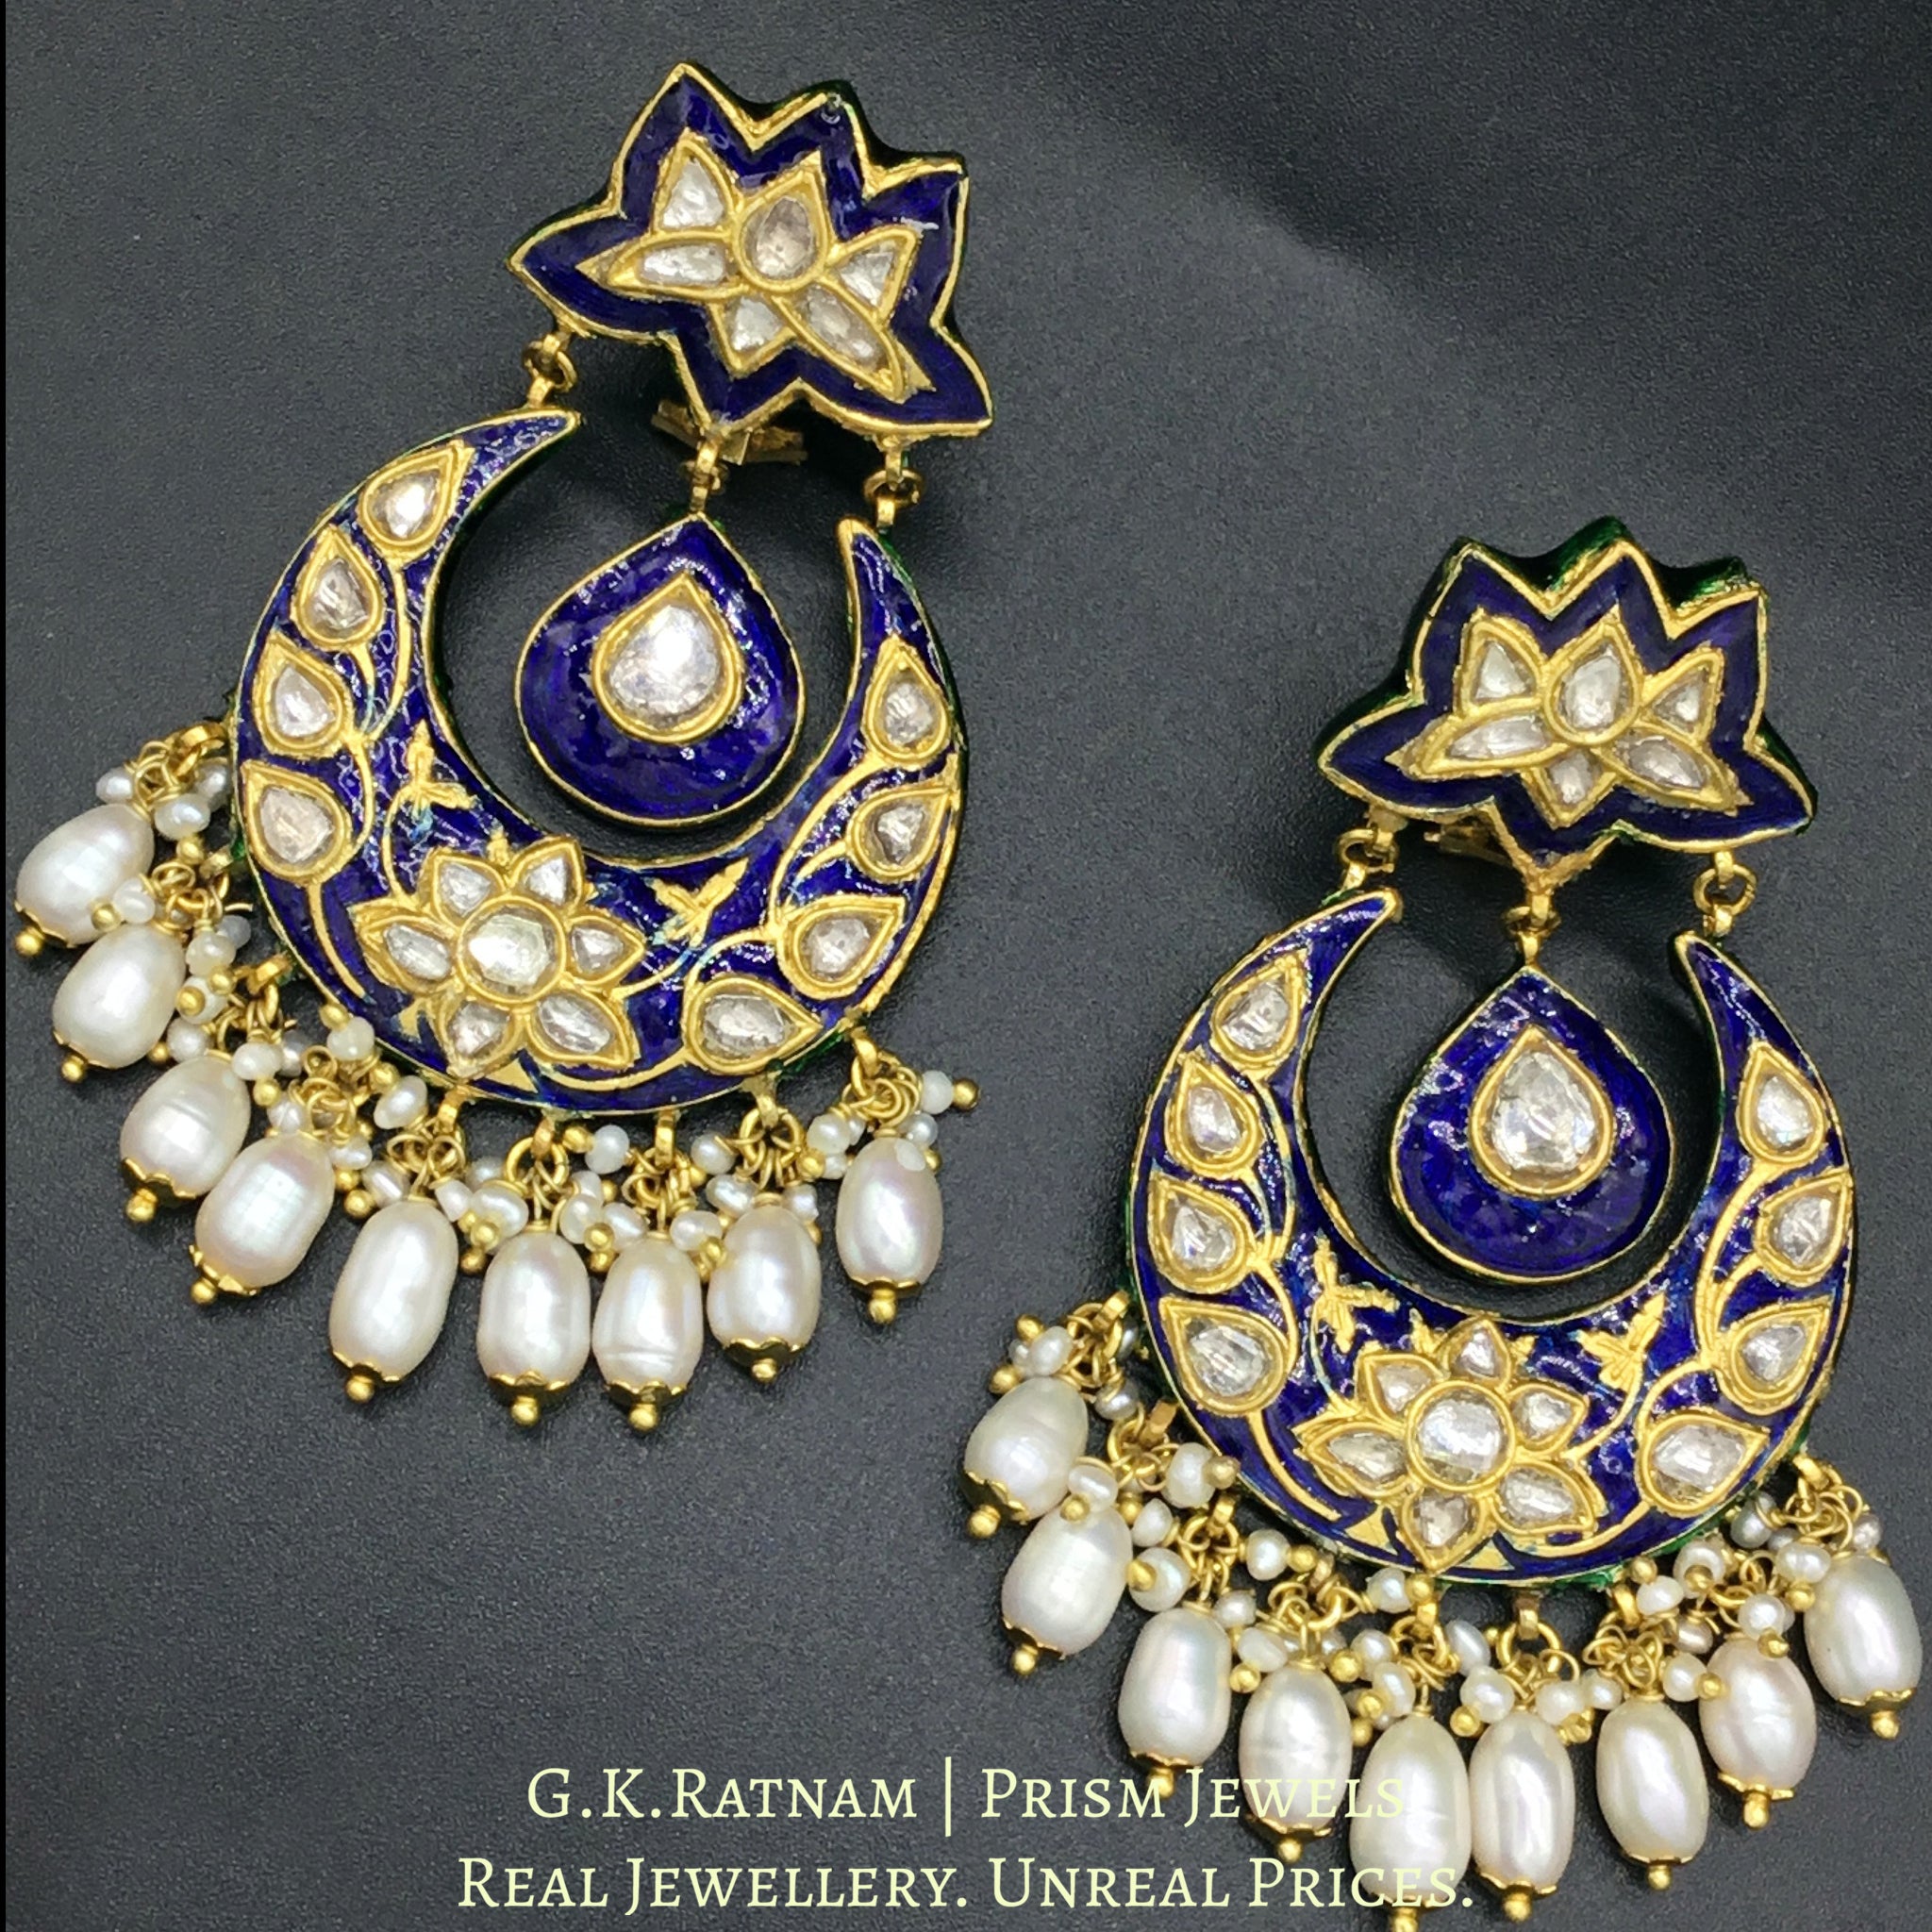 23k Gold and Diamond Polki Chand Bali Earring Pair with navy blue meenakari